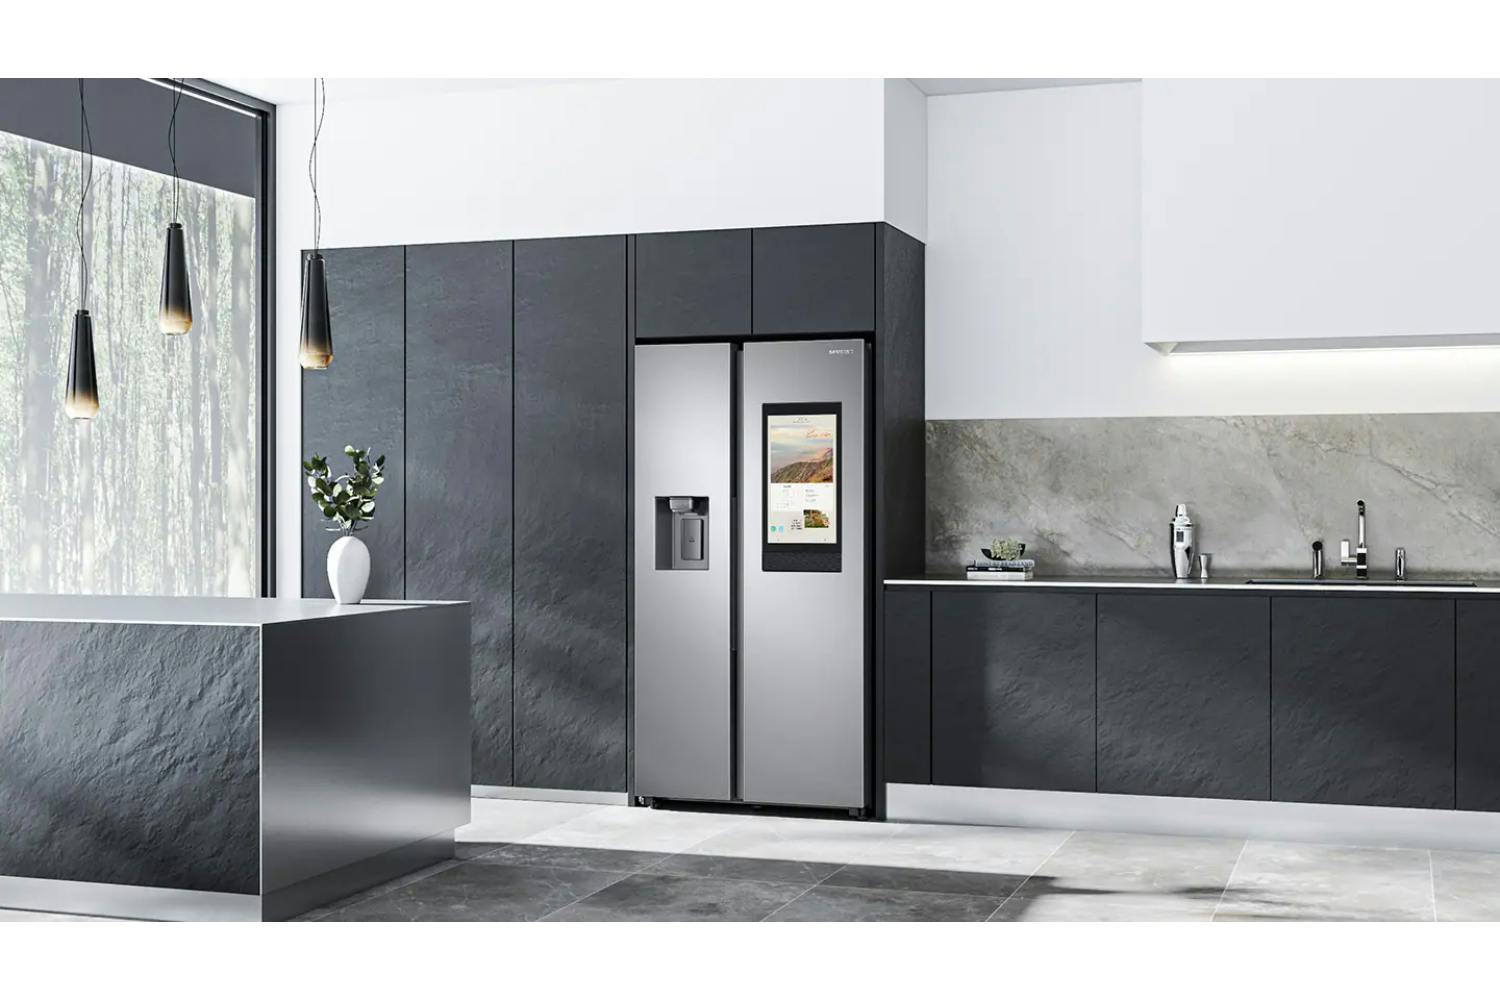 Samsung Family Hub American-Style Smart Fridge Freezer with SpaceMax RS6HA8891SL/EU - Aluminium